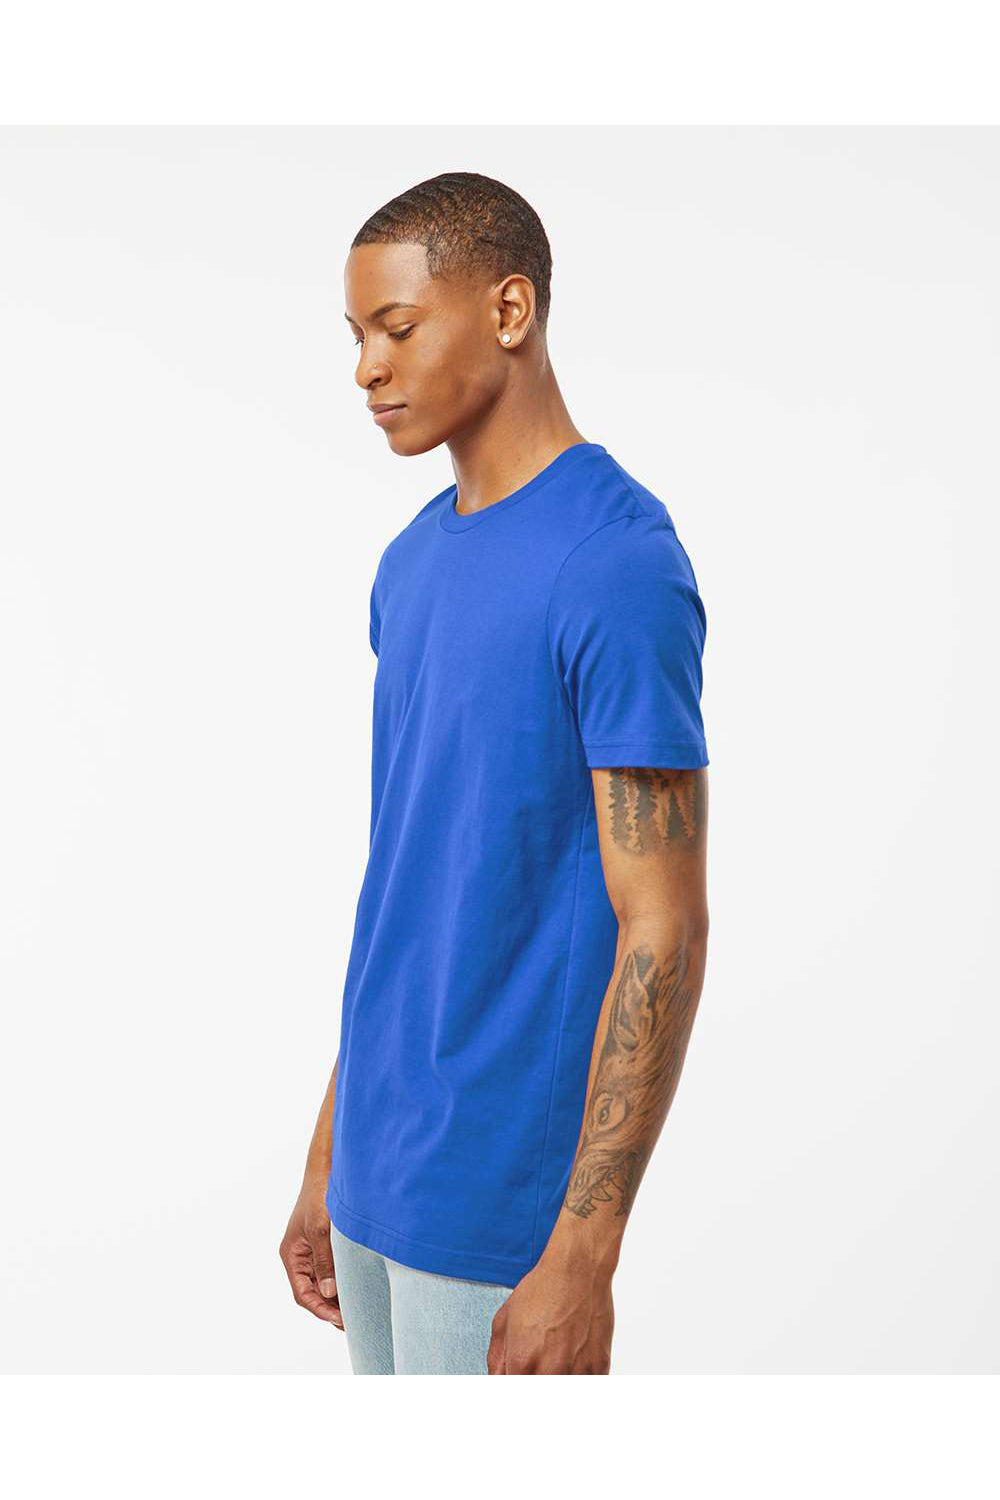 Tultex 602 Mens Short Sleeve Crewneck T-Shirt Royal Blue Model Side